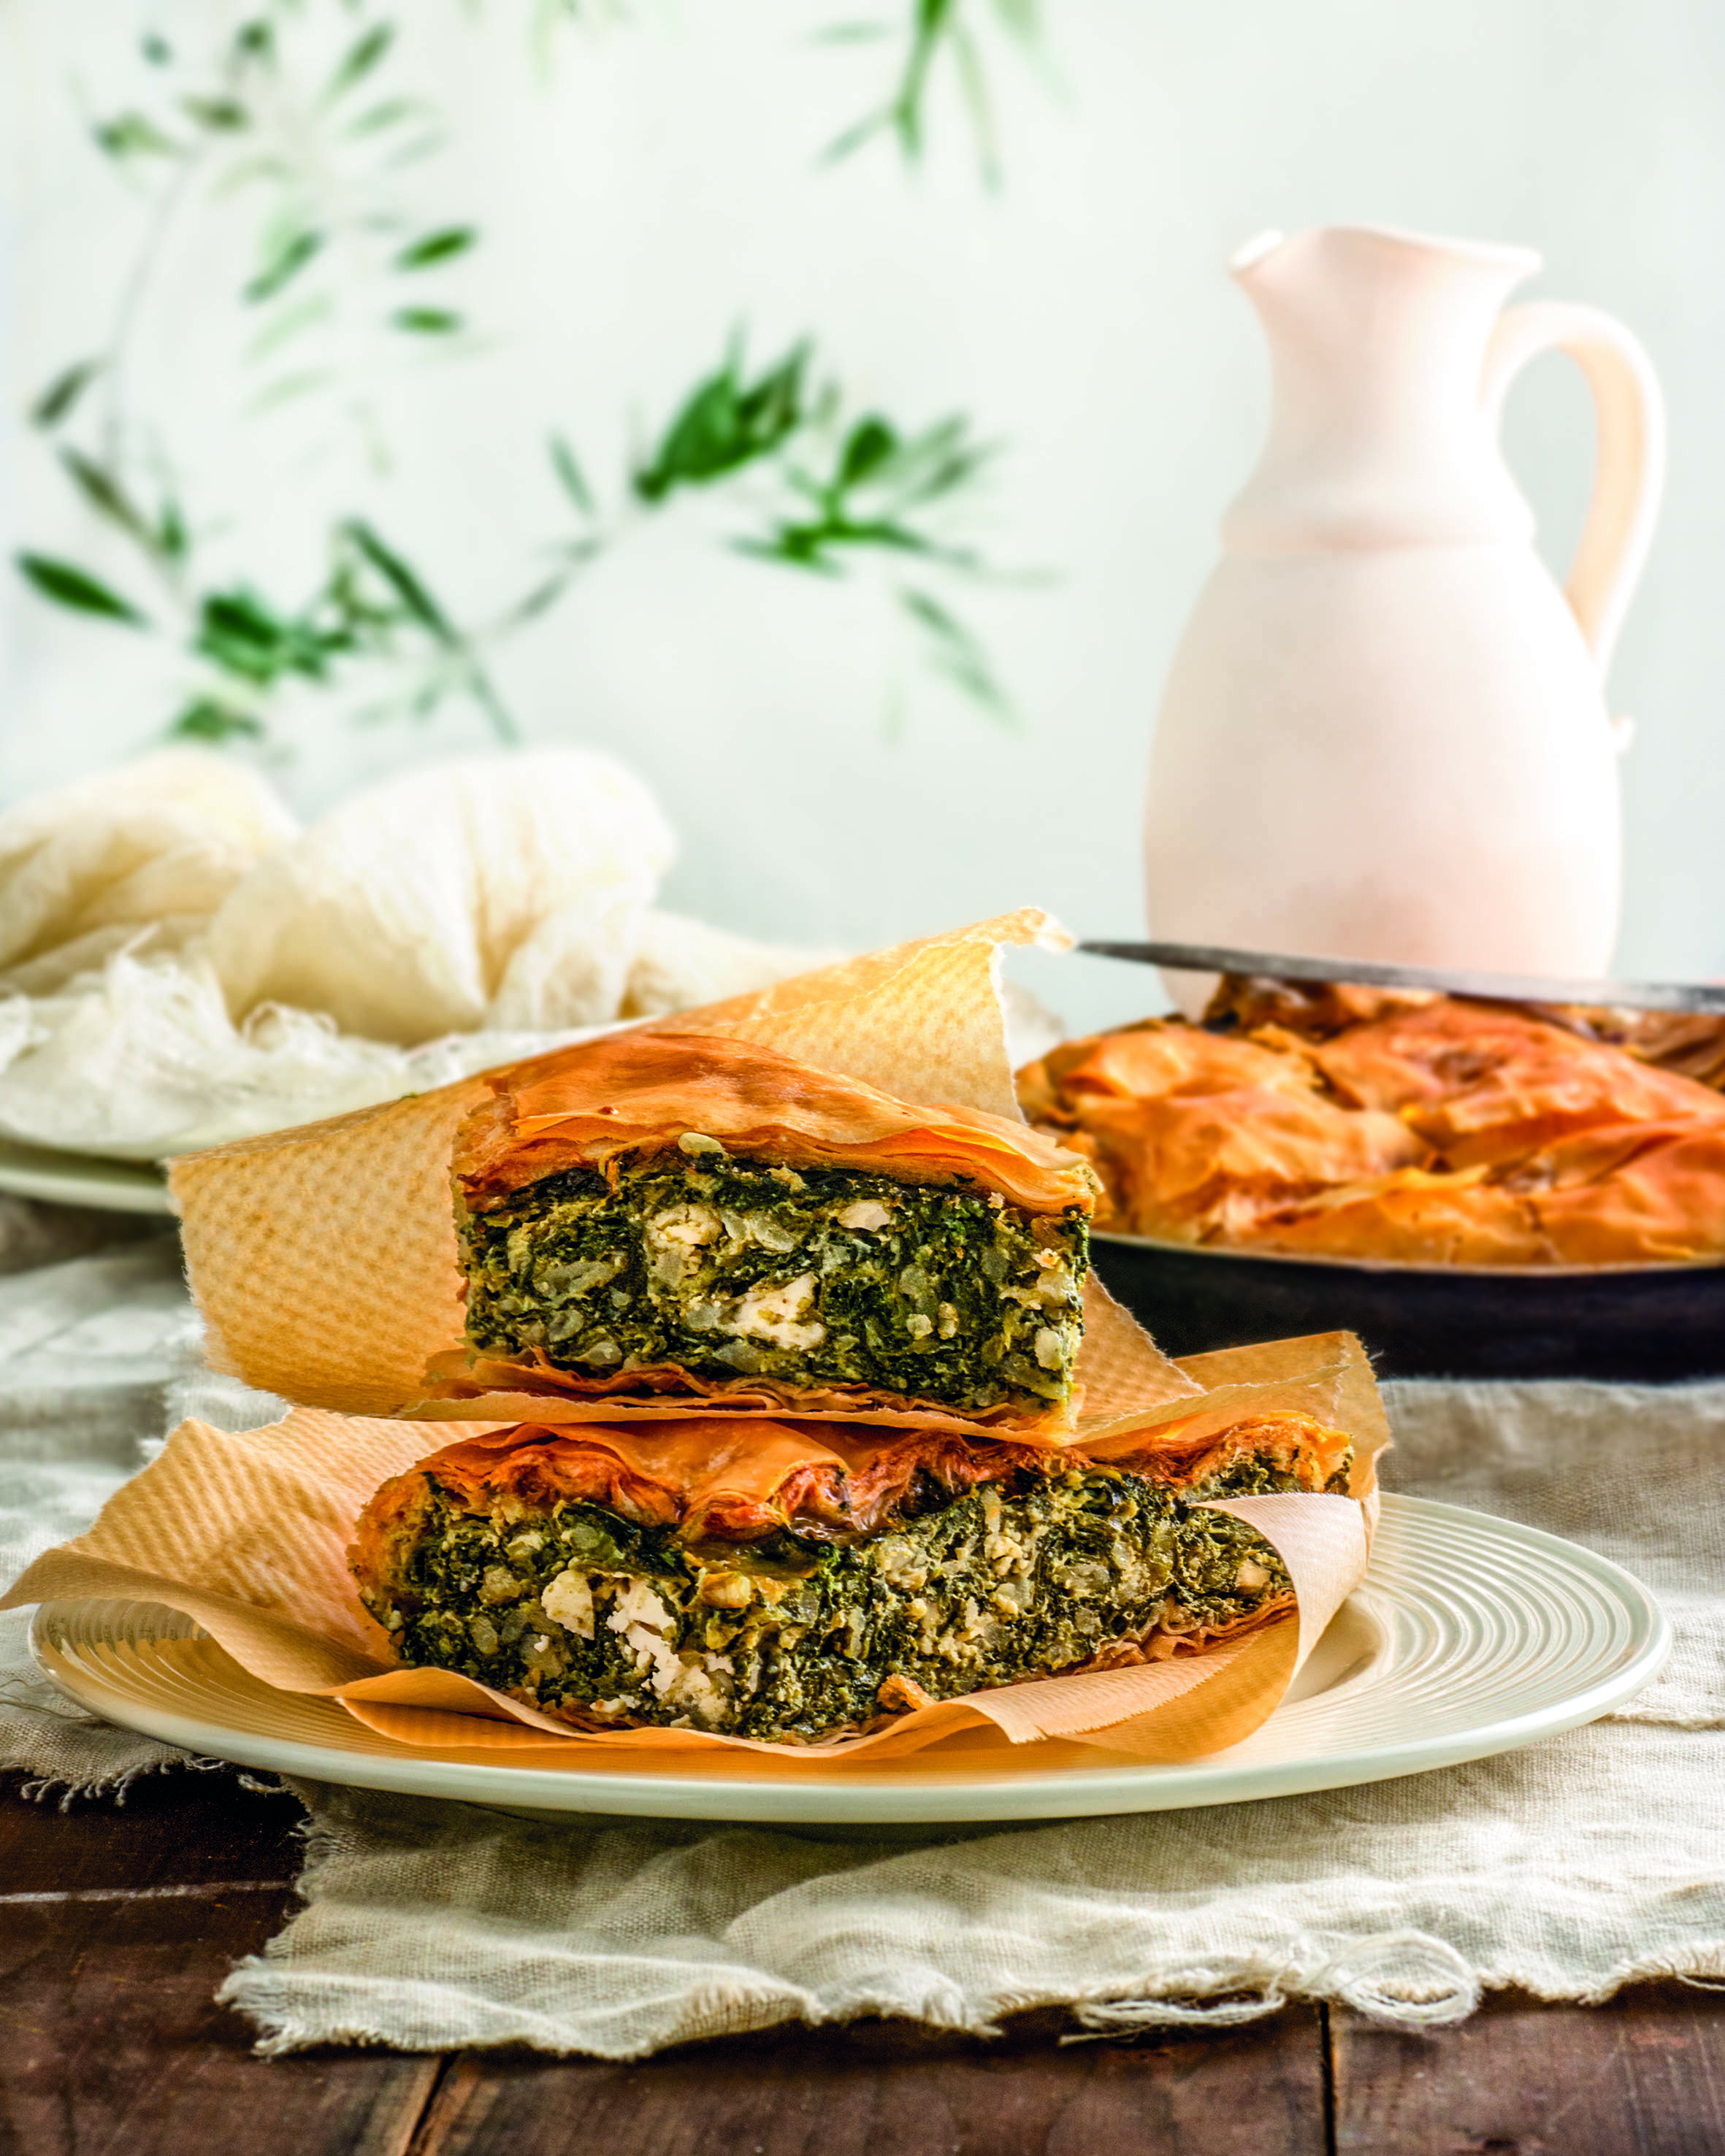 Spanakopita | Spinach Pie - The most famous Greek Pie